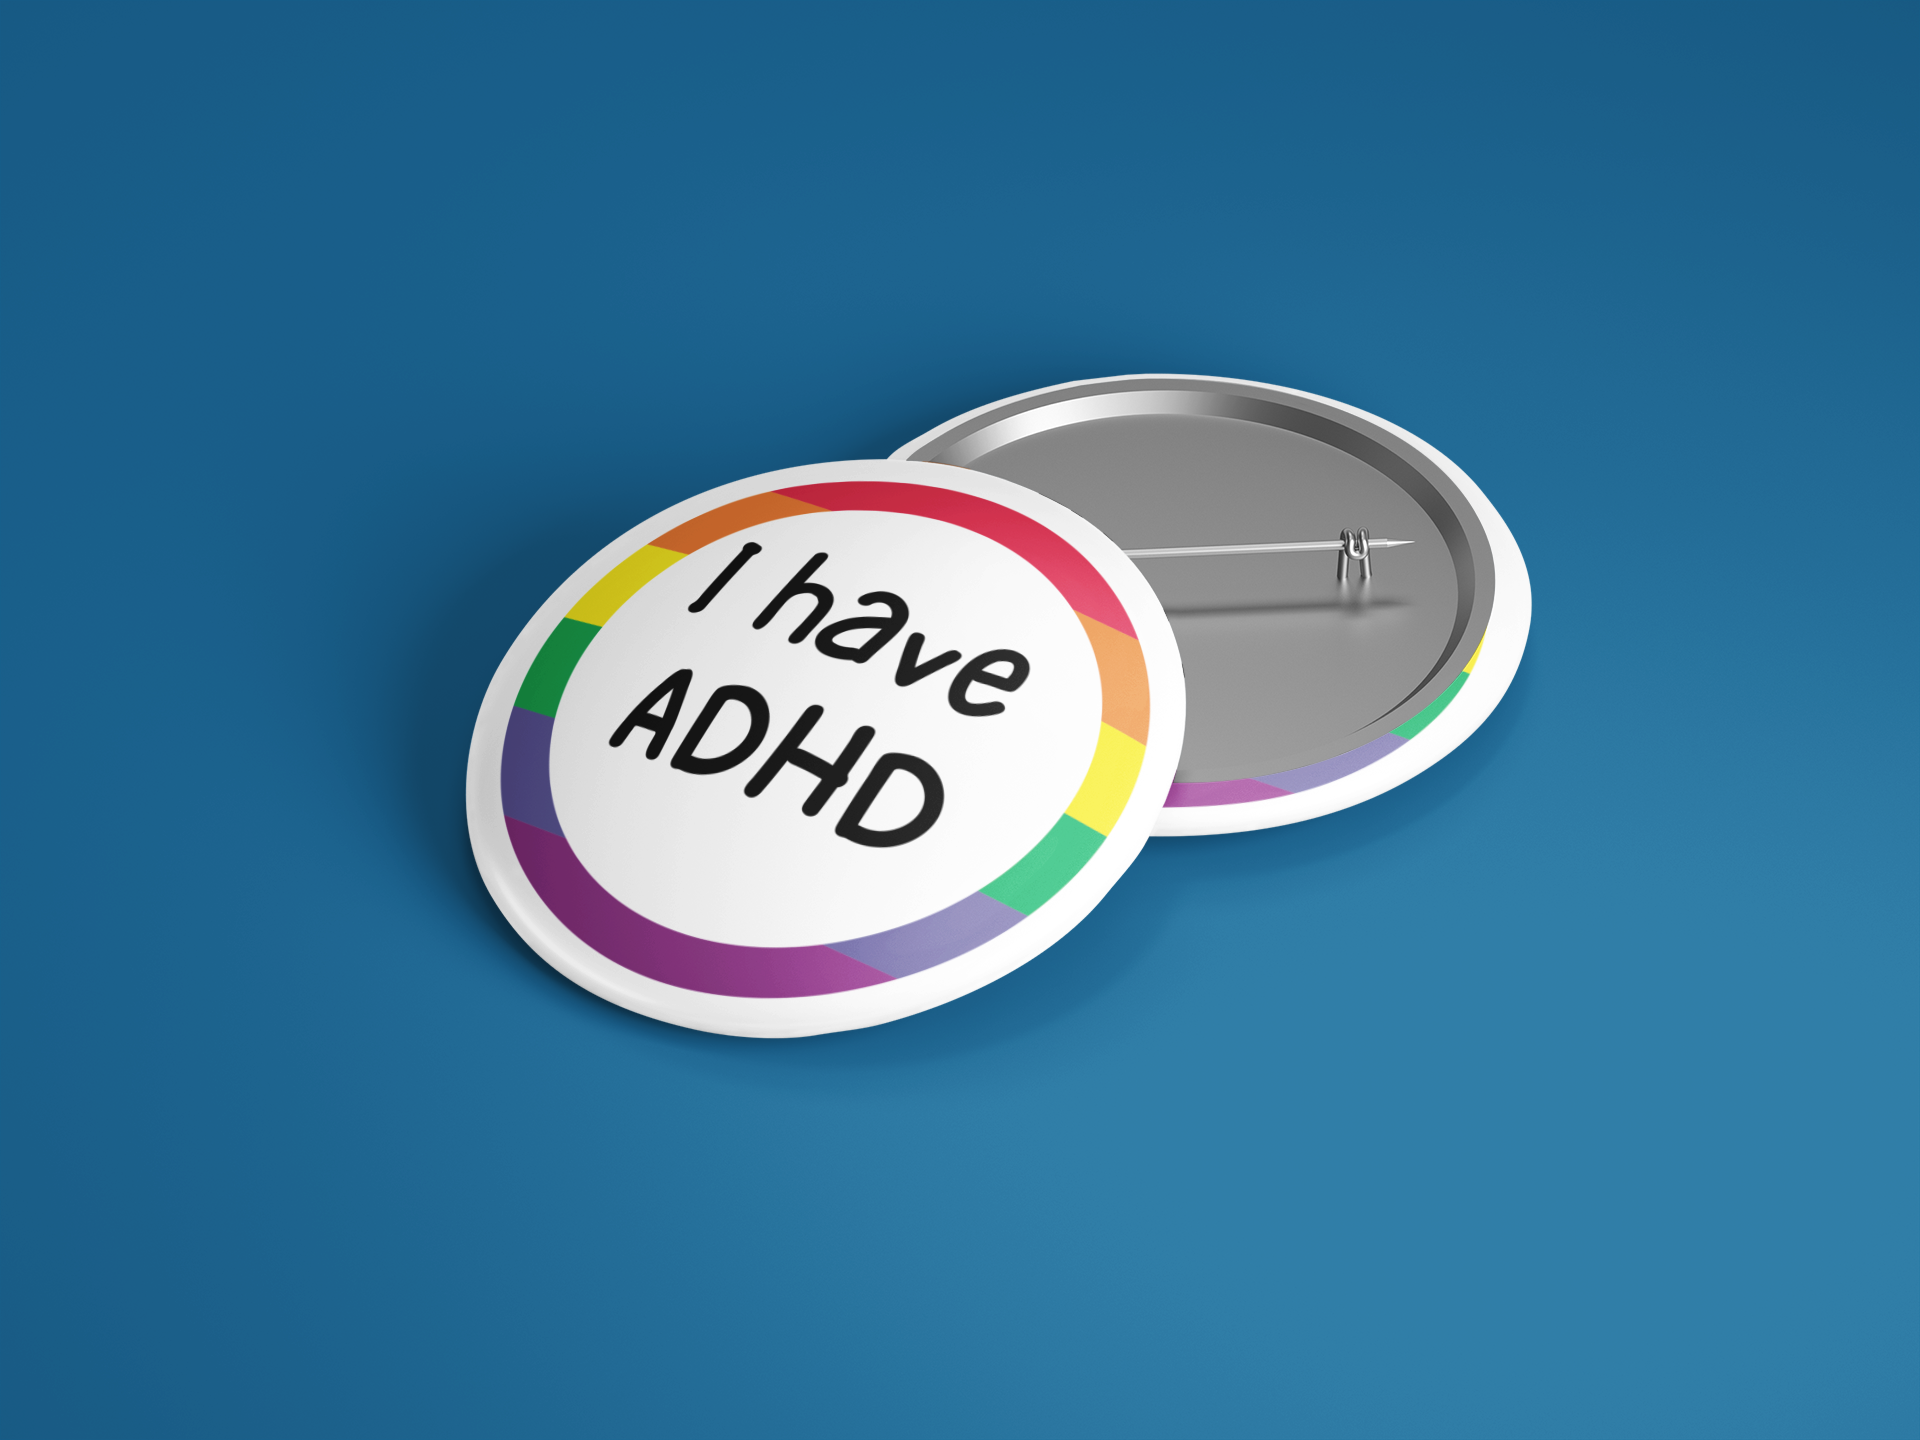 I have ADHD Button - beyourownherodesign